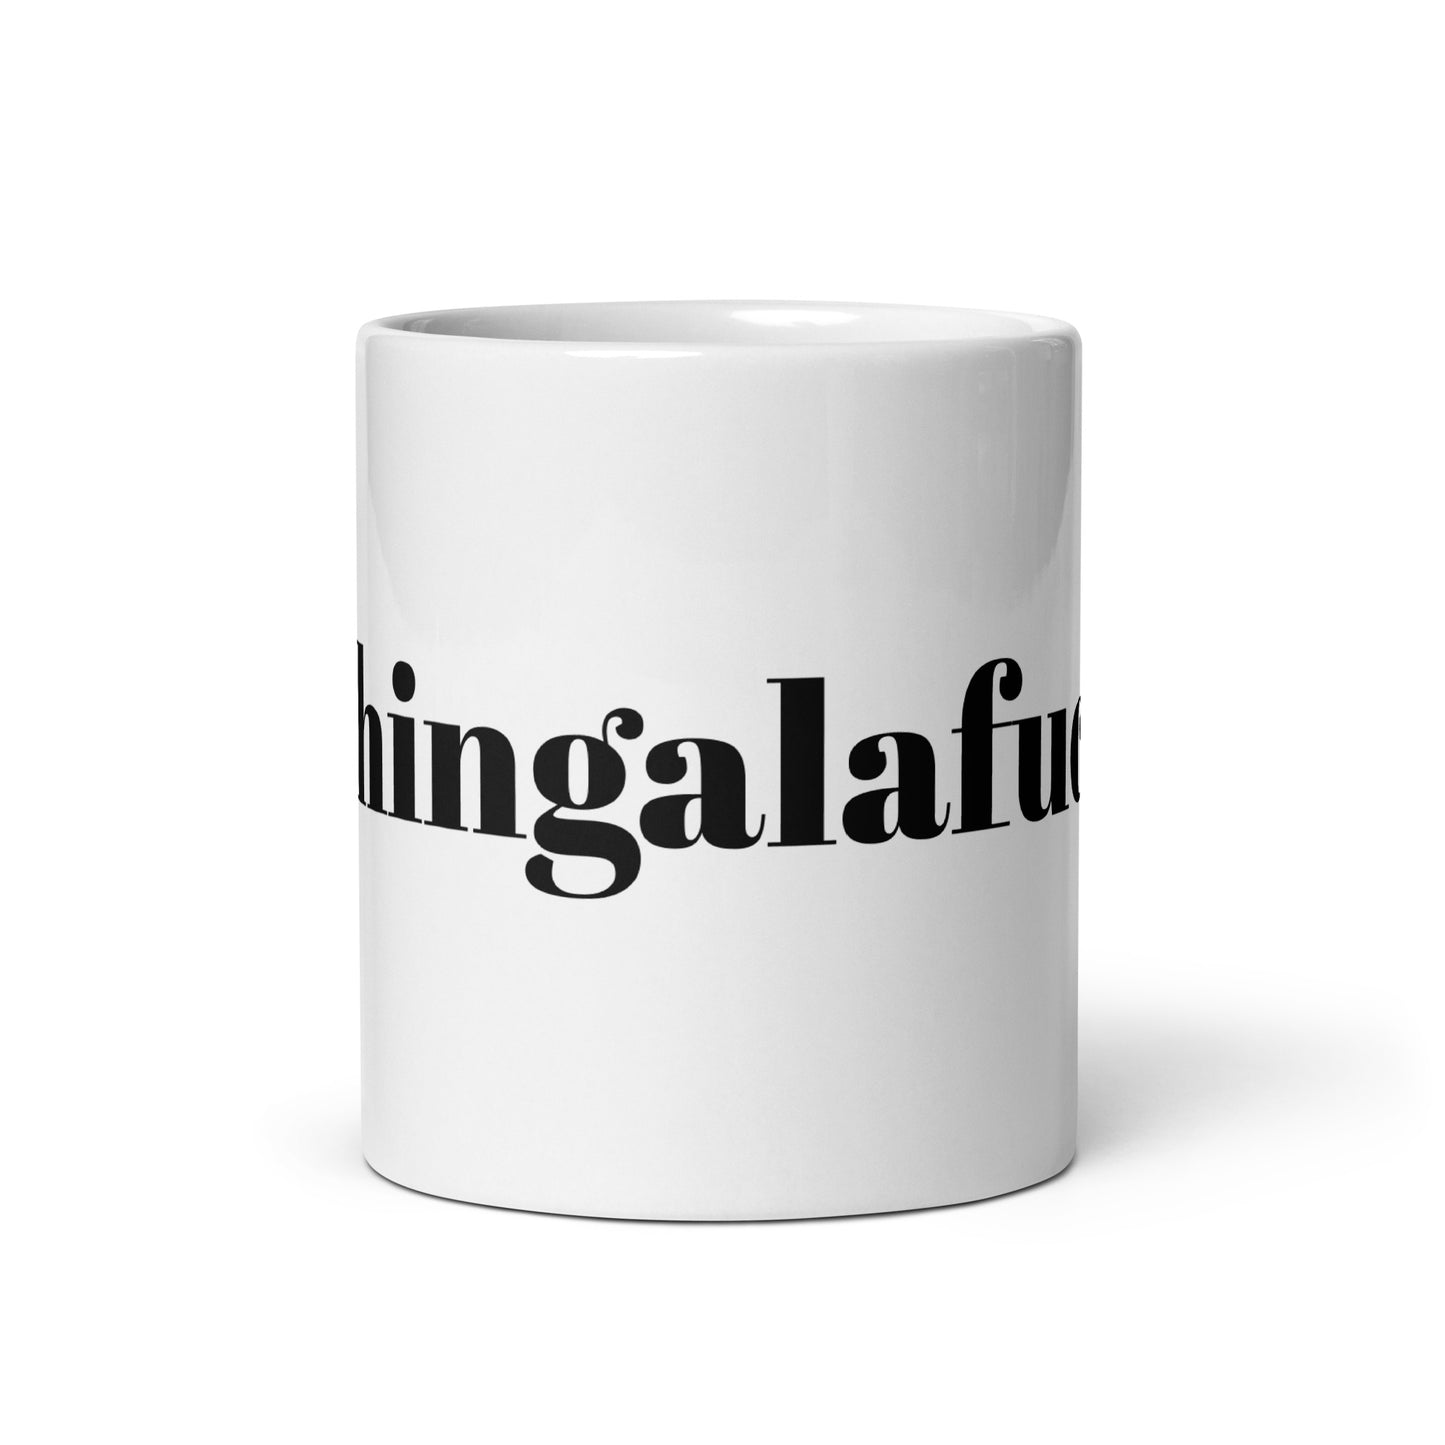 Chingalafuck White Glossy Mug Tasa